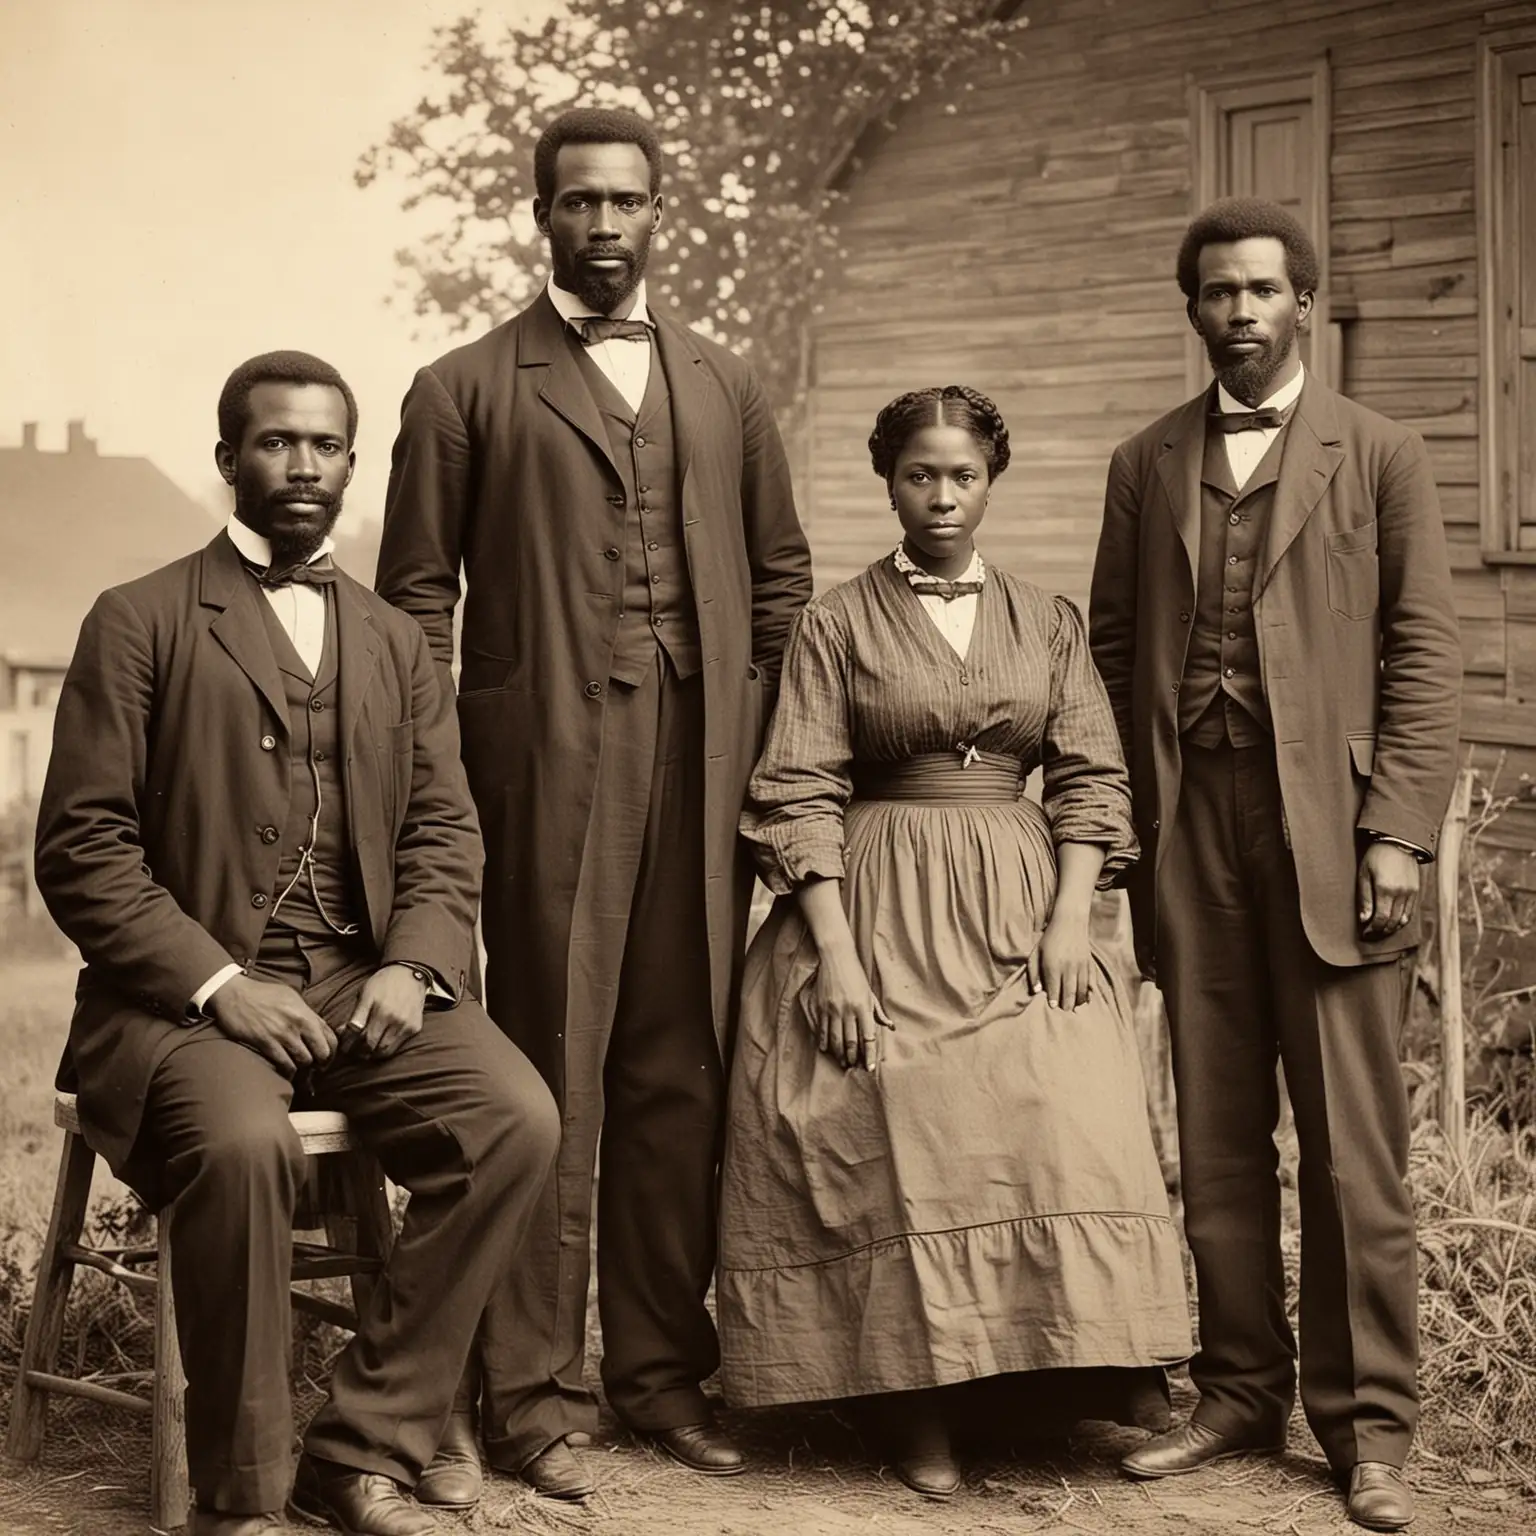 African-American teachers 2 men and 2 women, rural community, 1868